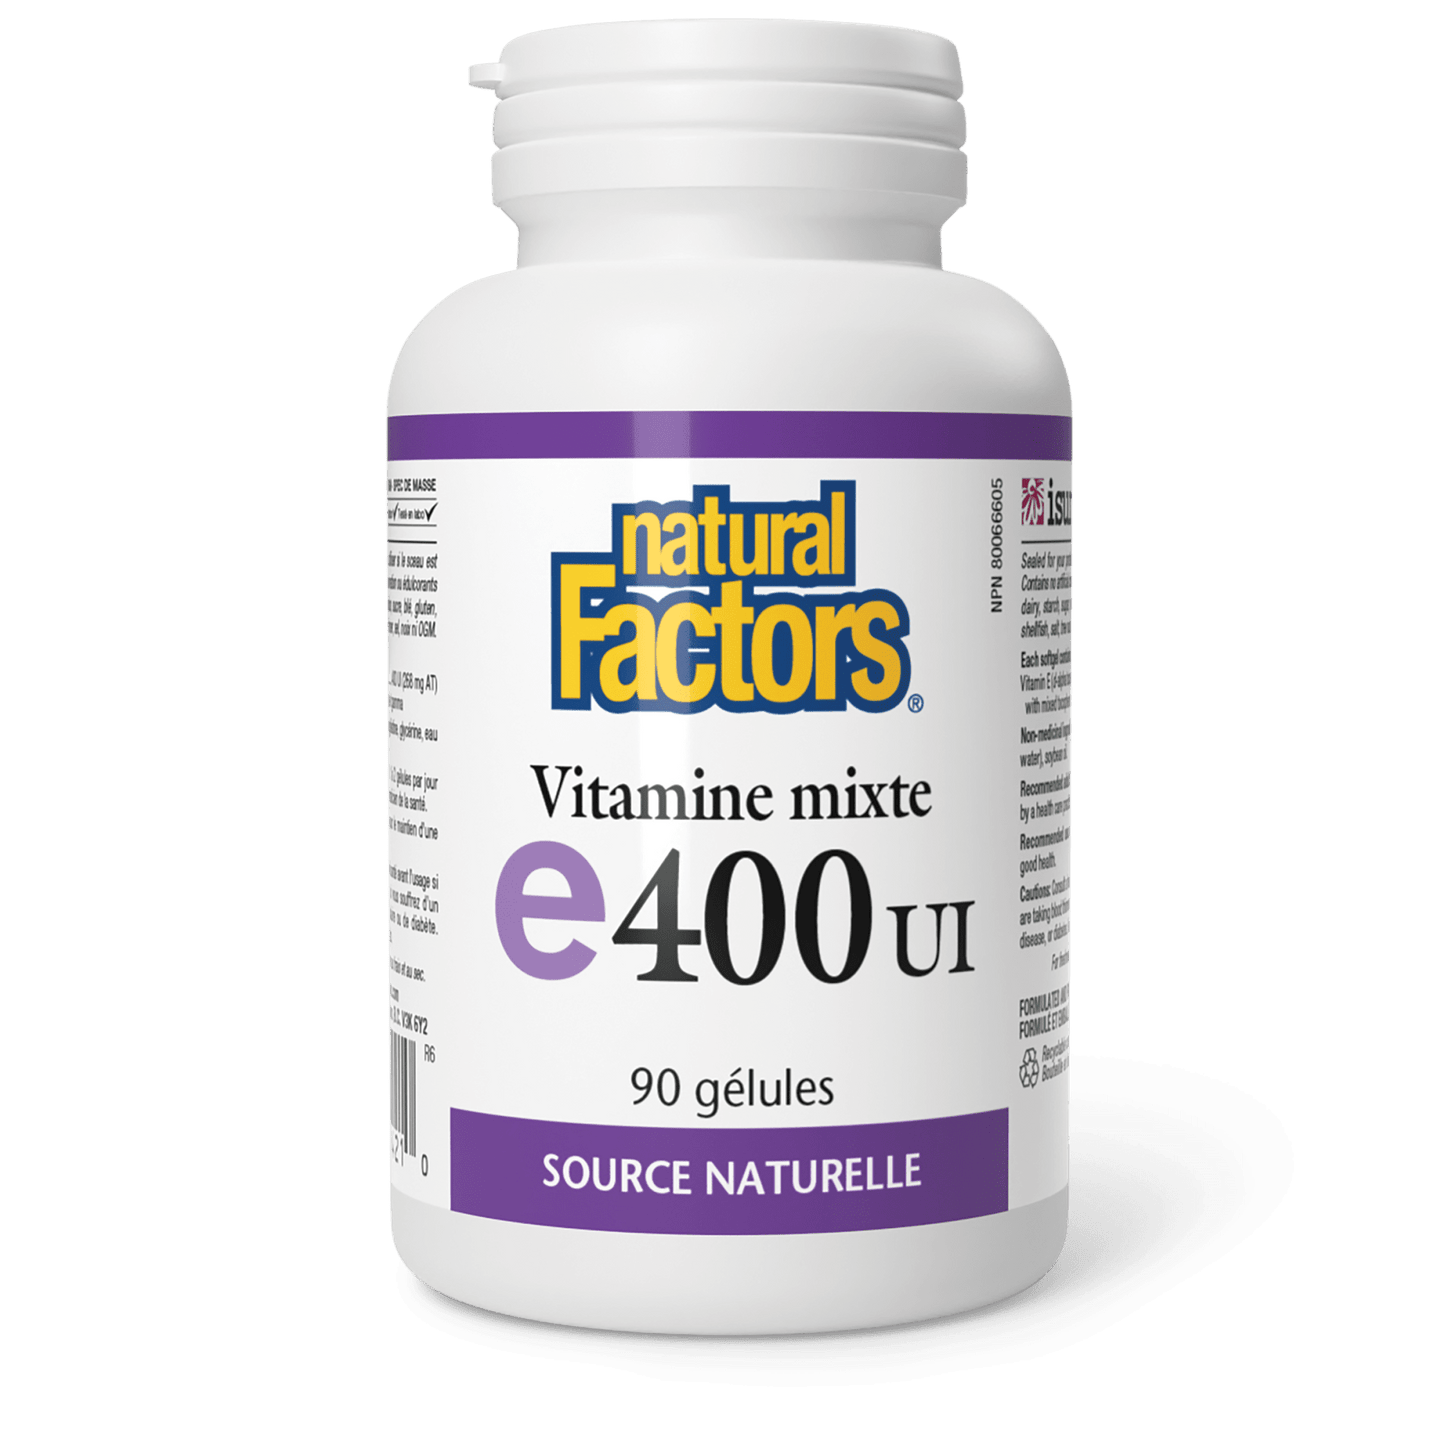 Vitamine mixte E 400 UI, source naturelle, Natural Factors|v|image|1421